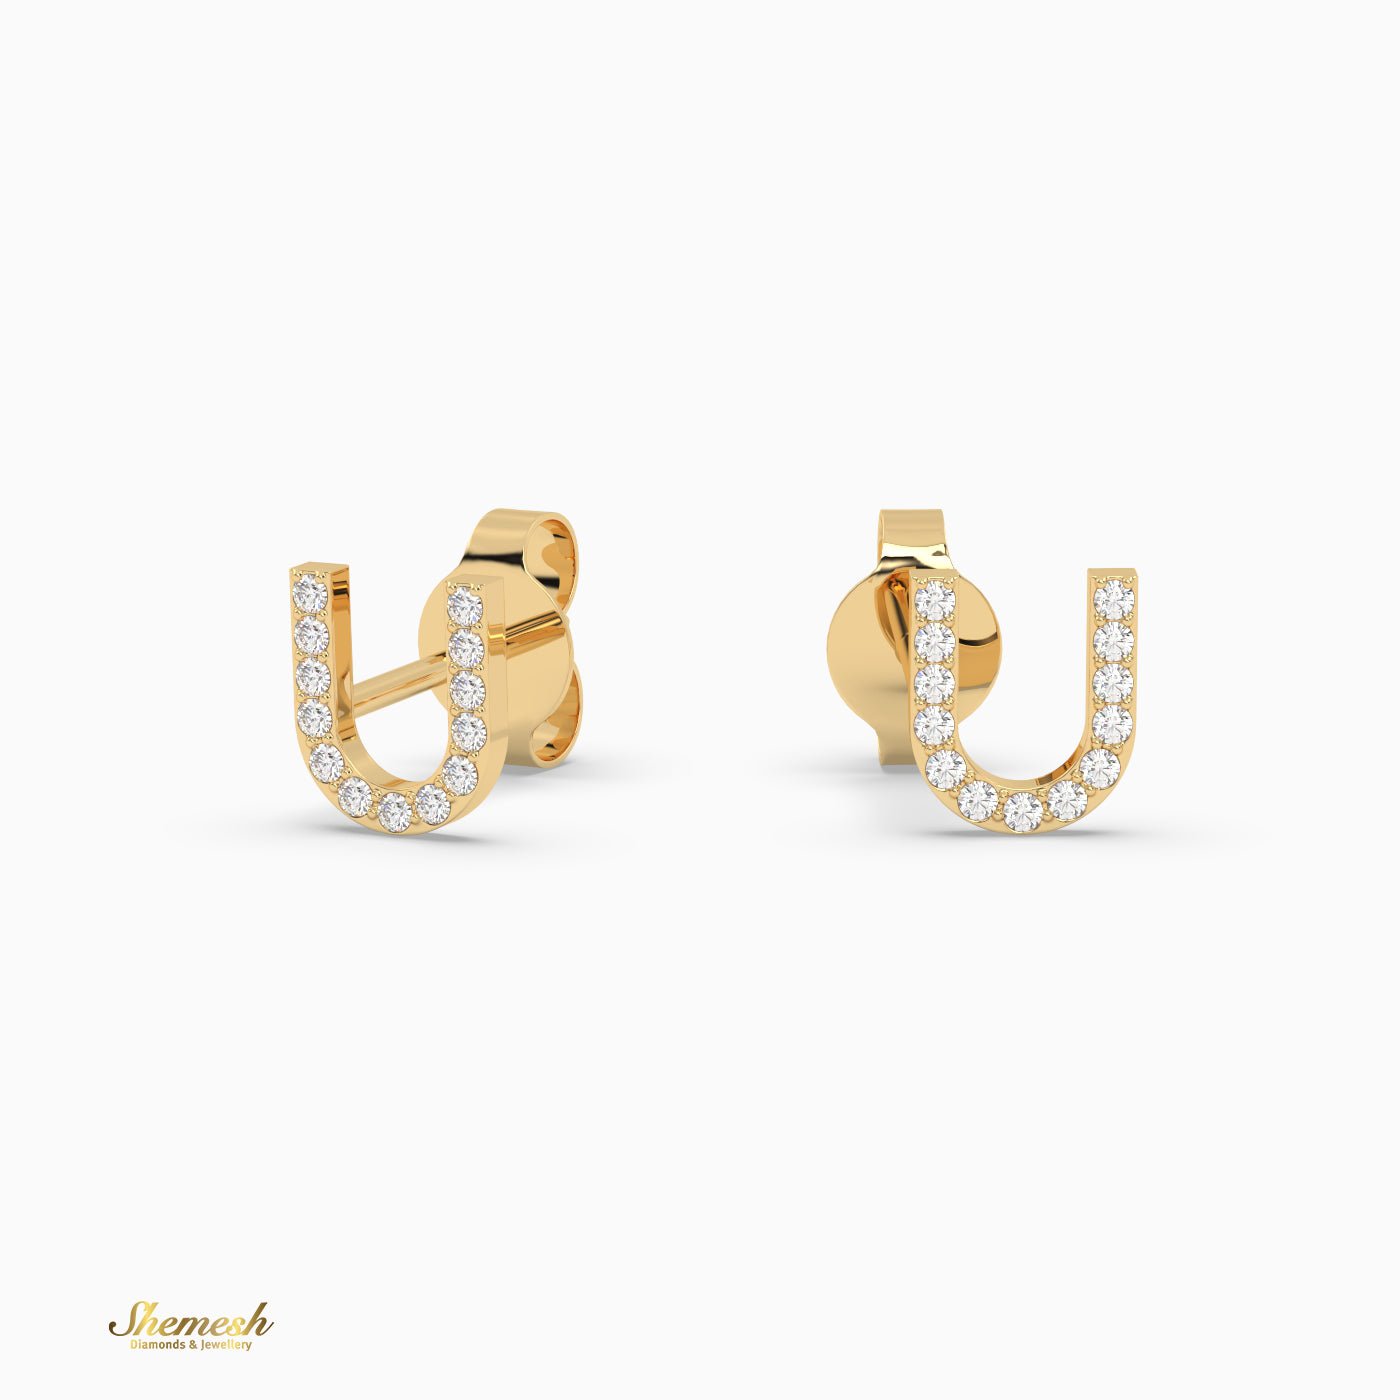 18K Gold "U" Initial Stud Earrings - shemesh_diamonds